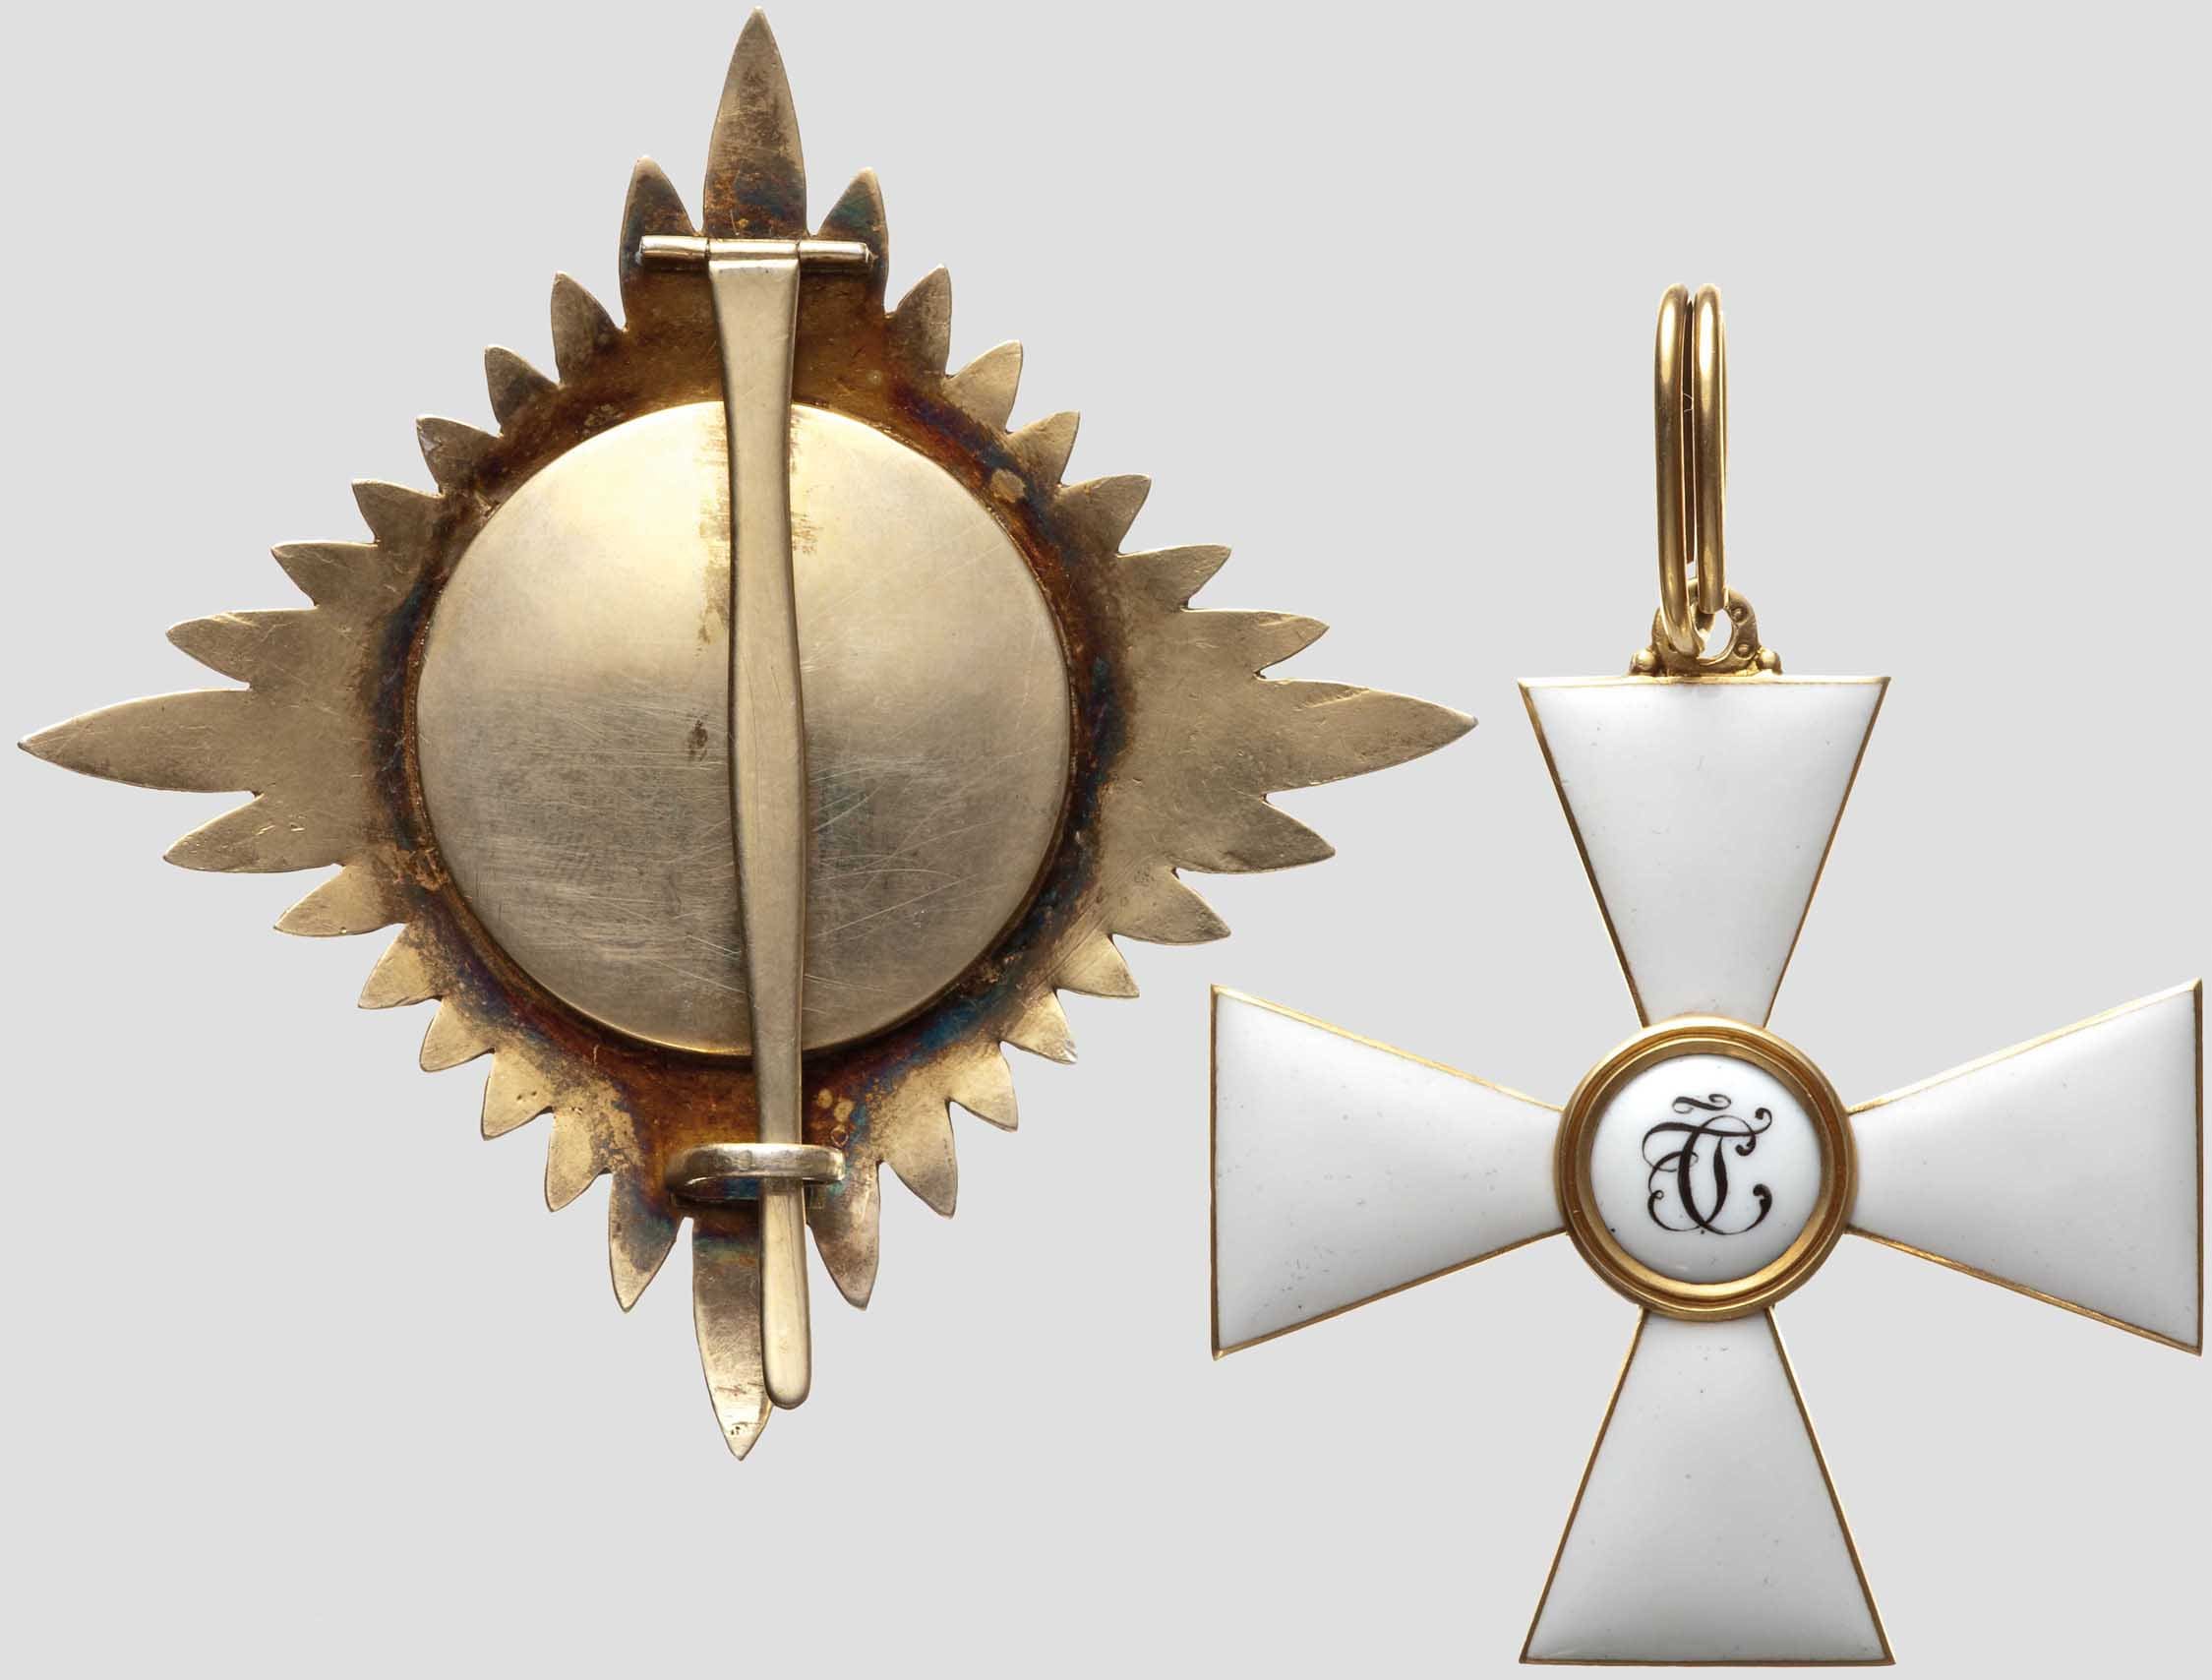 Fake Breast Star of the  Order of  St.George.jpg